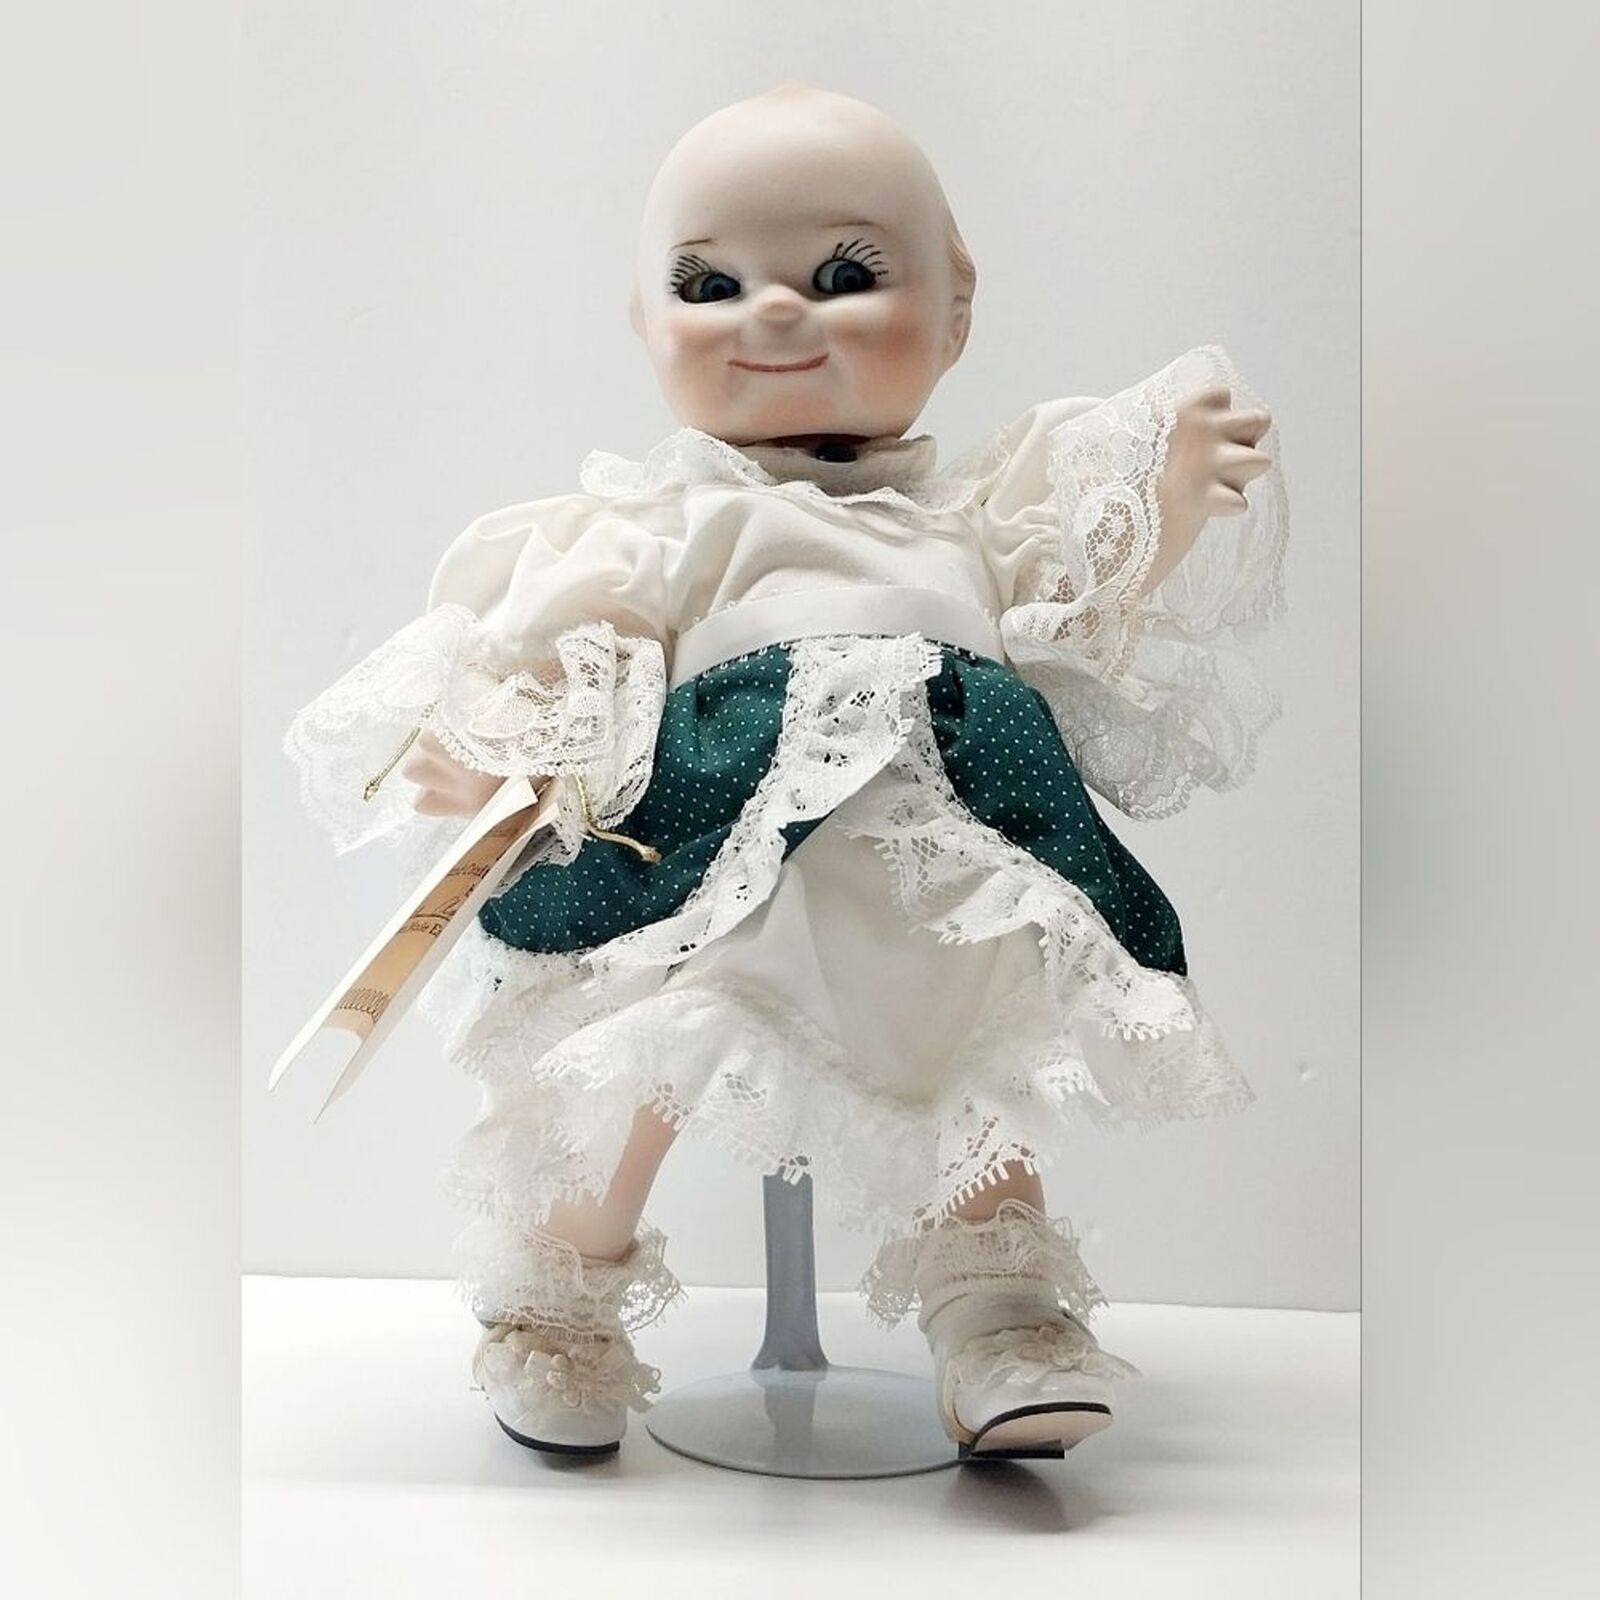 Vintage Handcrafted Original Barbara Ann Nulty Kewpie Doll with Stand Porcelain